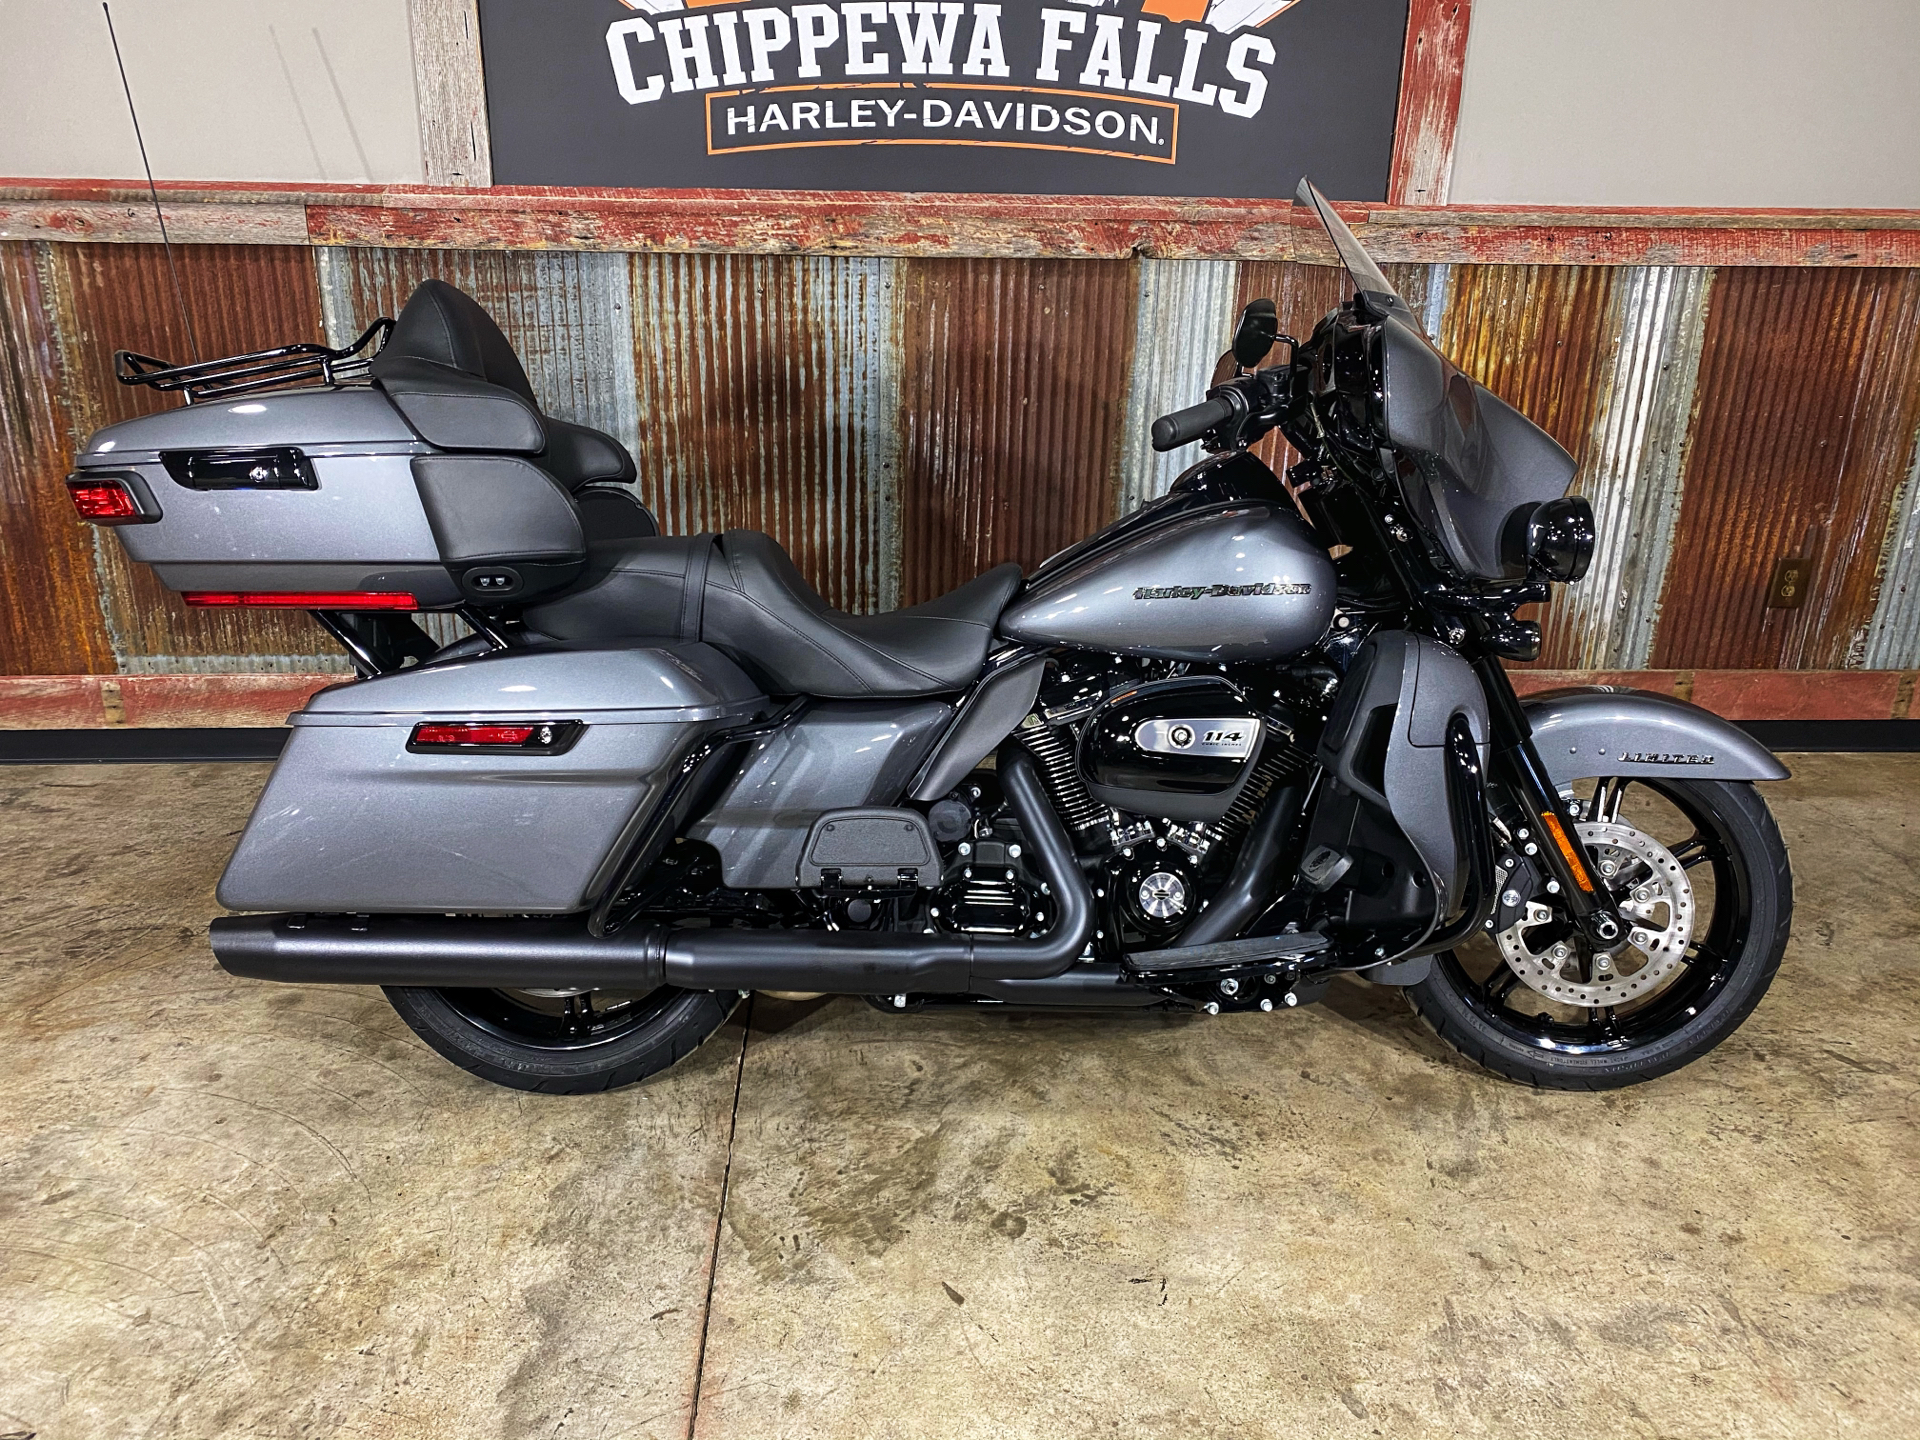 New 2021 Harley Davidson Ultra Limited Gauntlet Gray Metallic Black Pearl Option Motorcycles In Chippewa Falls Wi Fl615004